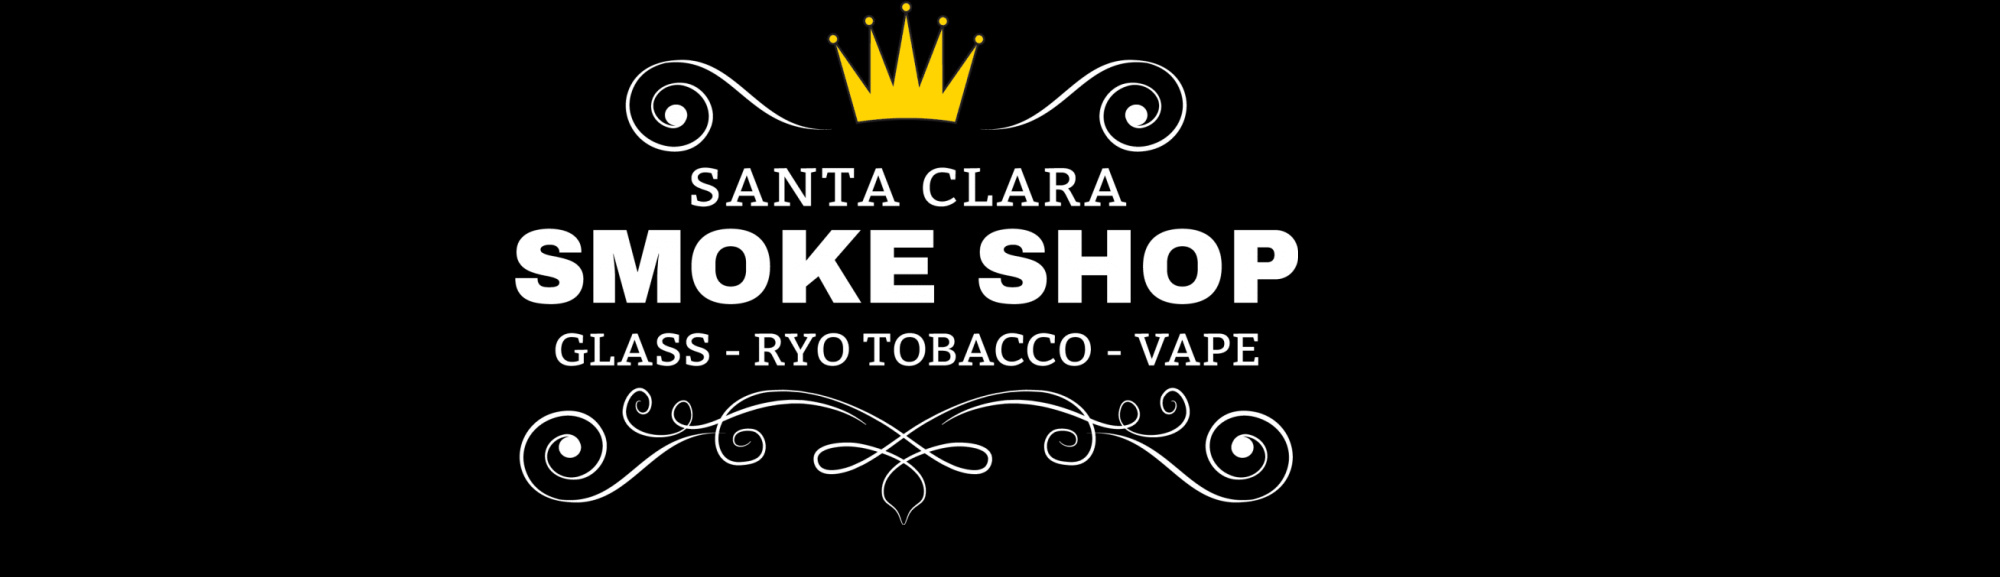 image of santa clara smoke shop in or